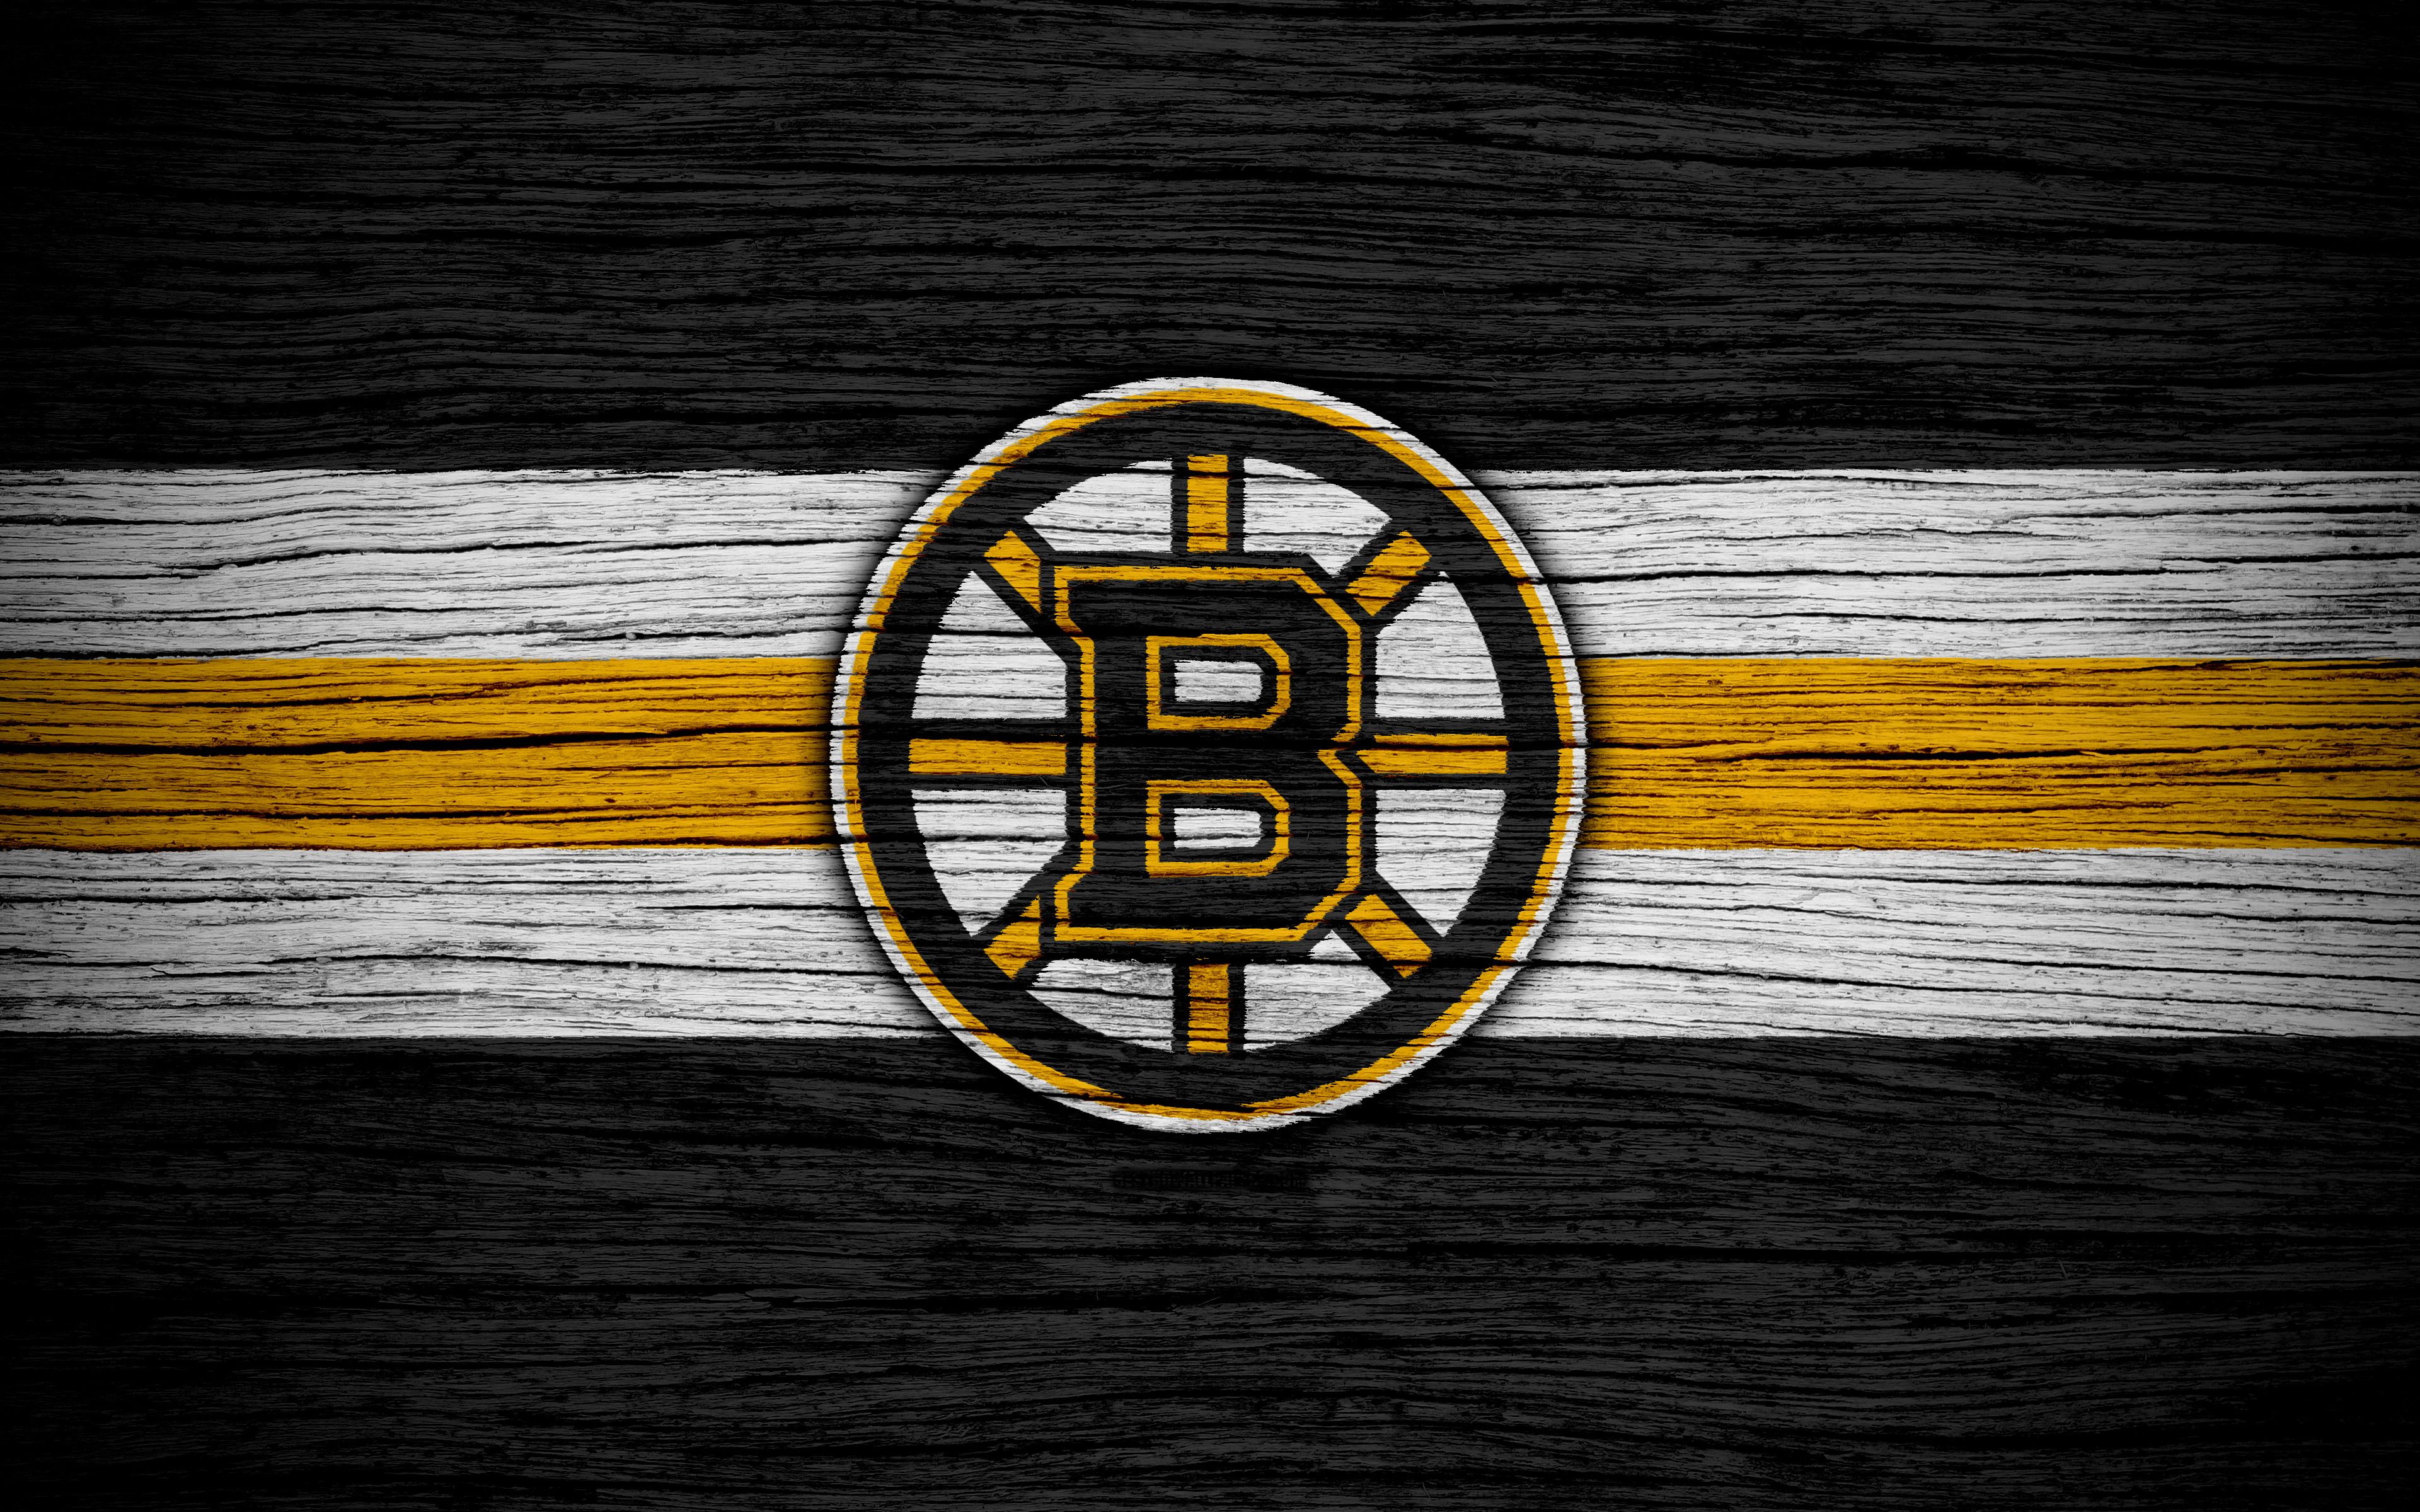 Download wallpaper Boston Bruins, 4k, hockey club, NHL, Eastern